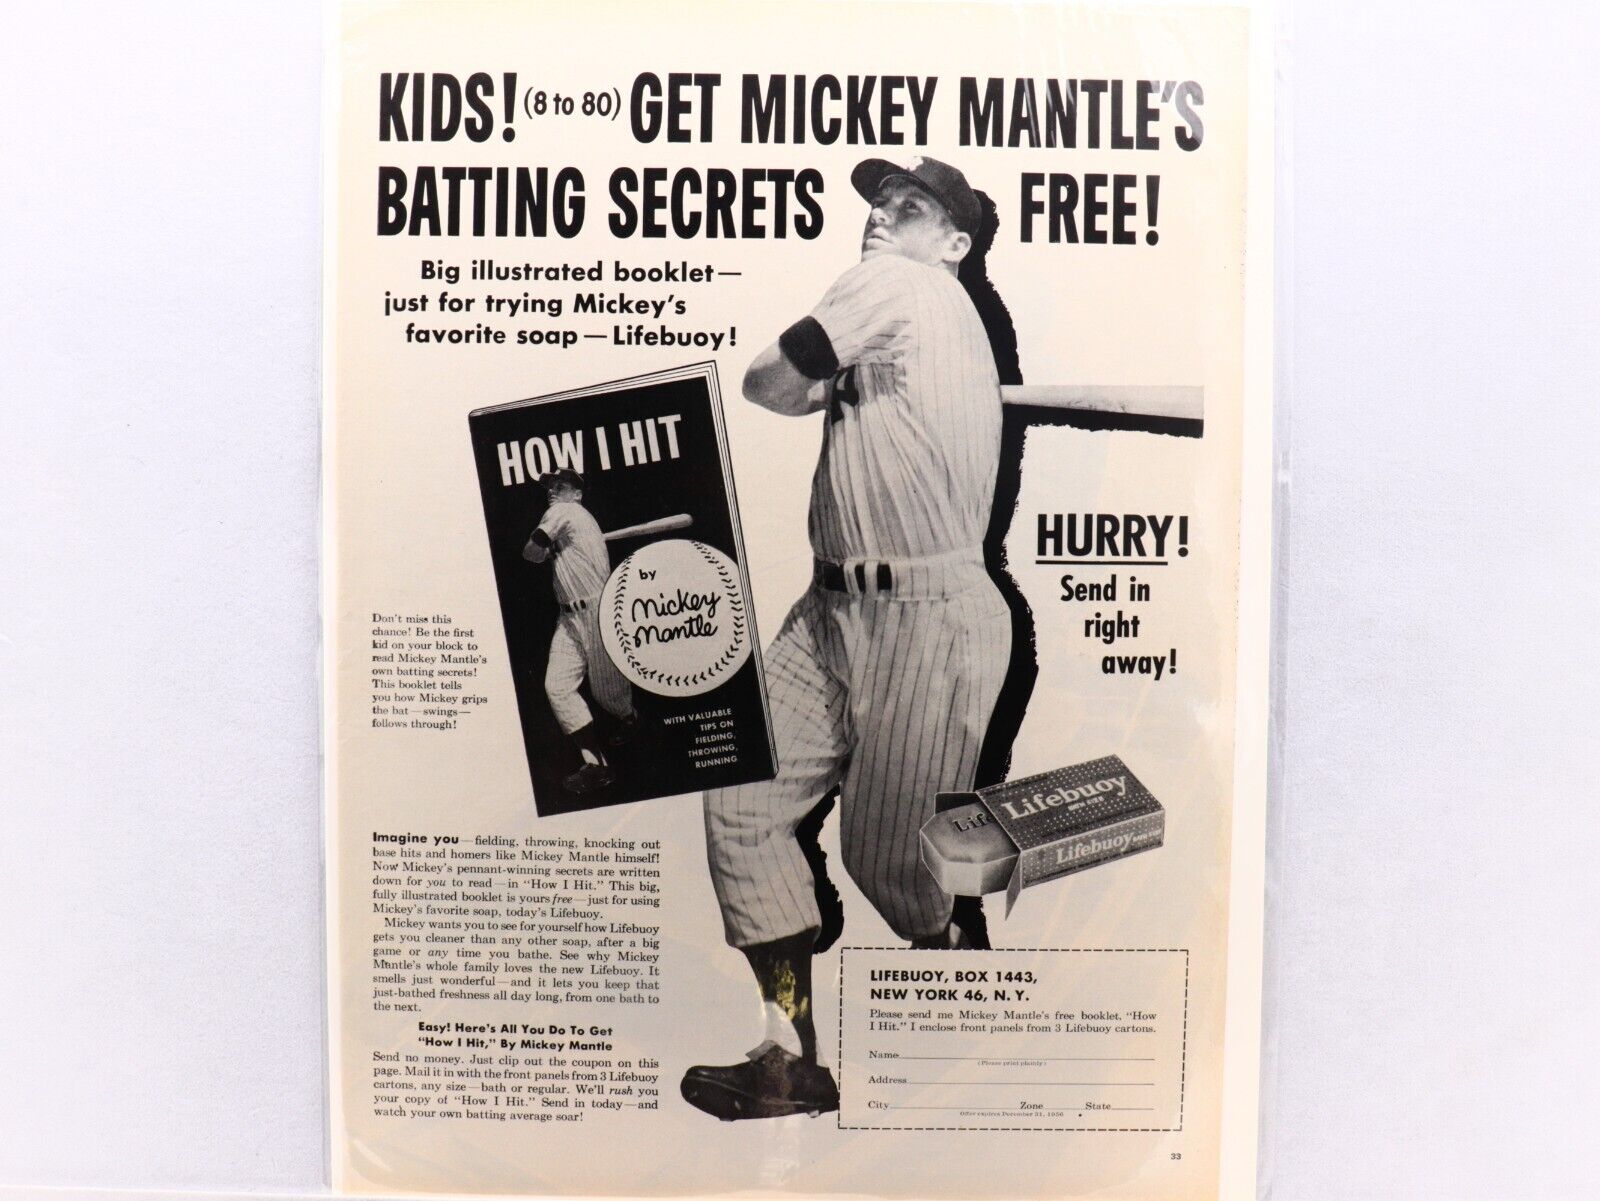 New York Yankees Mickey Mantle's Batting Secrets 1956 Lifebuoy Ad, Free Booklet.